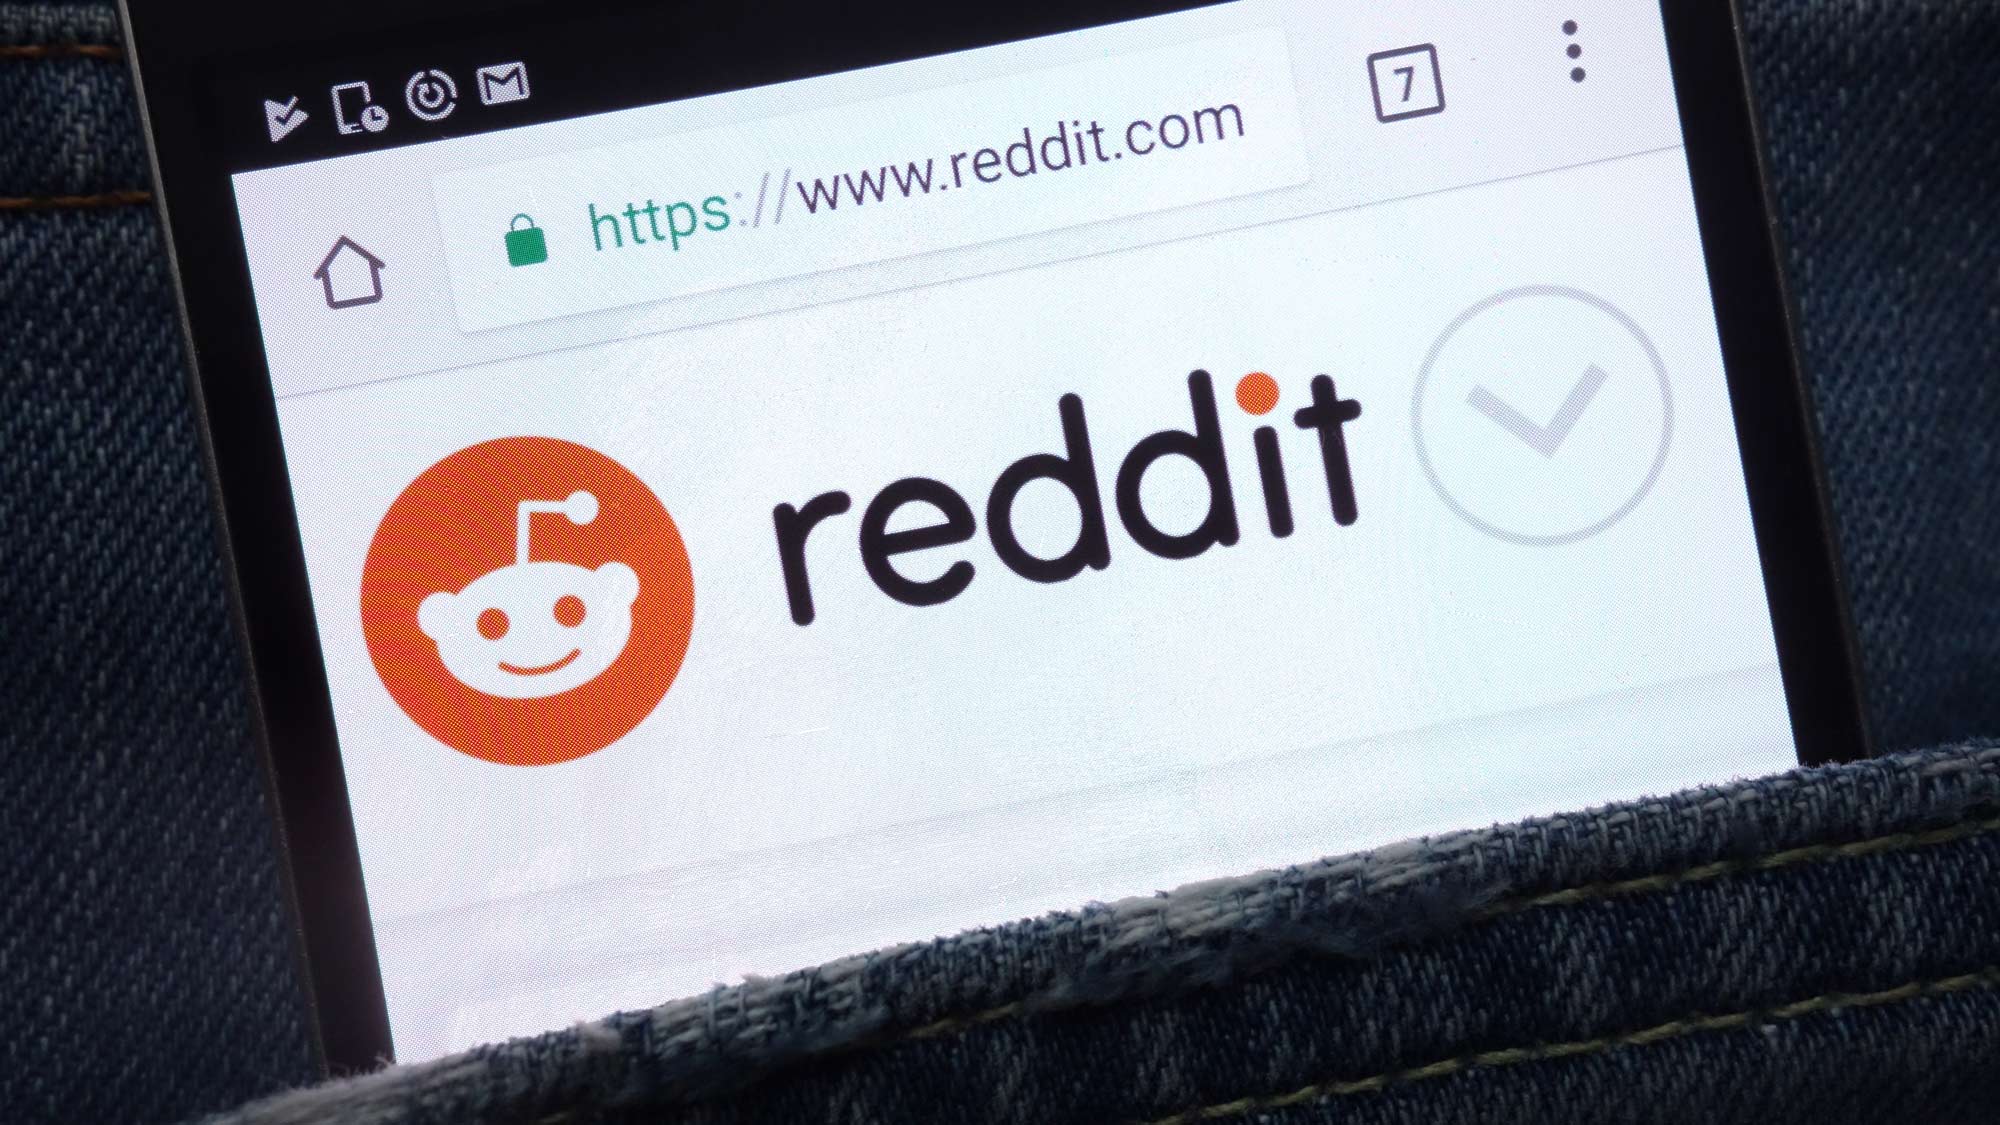 Reddit-Logo